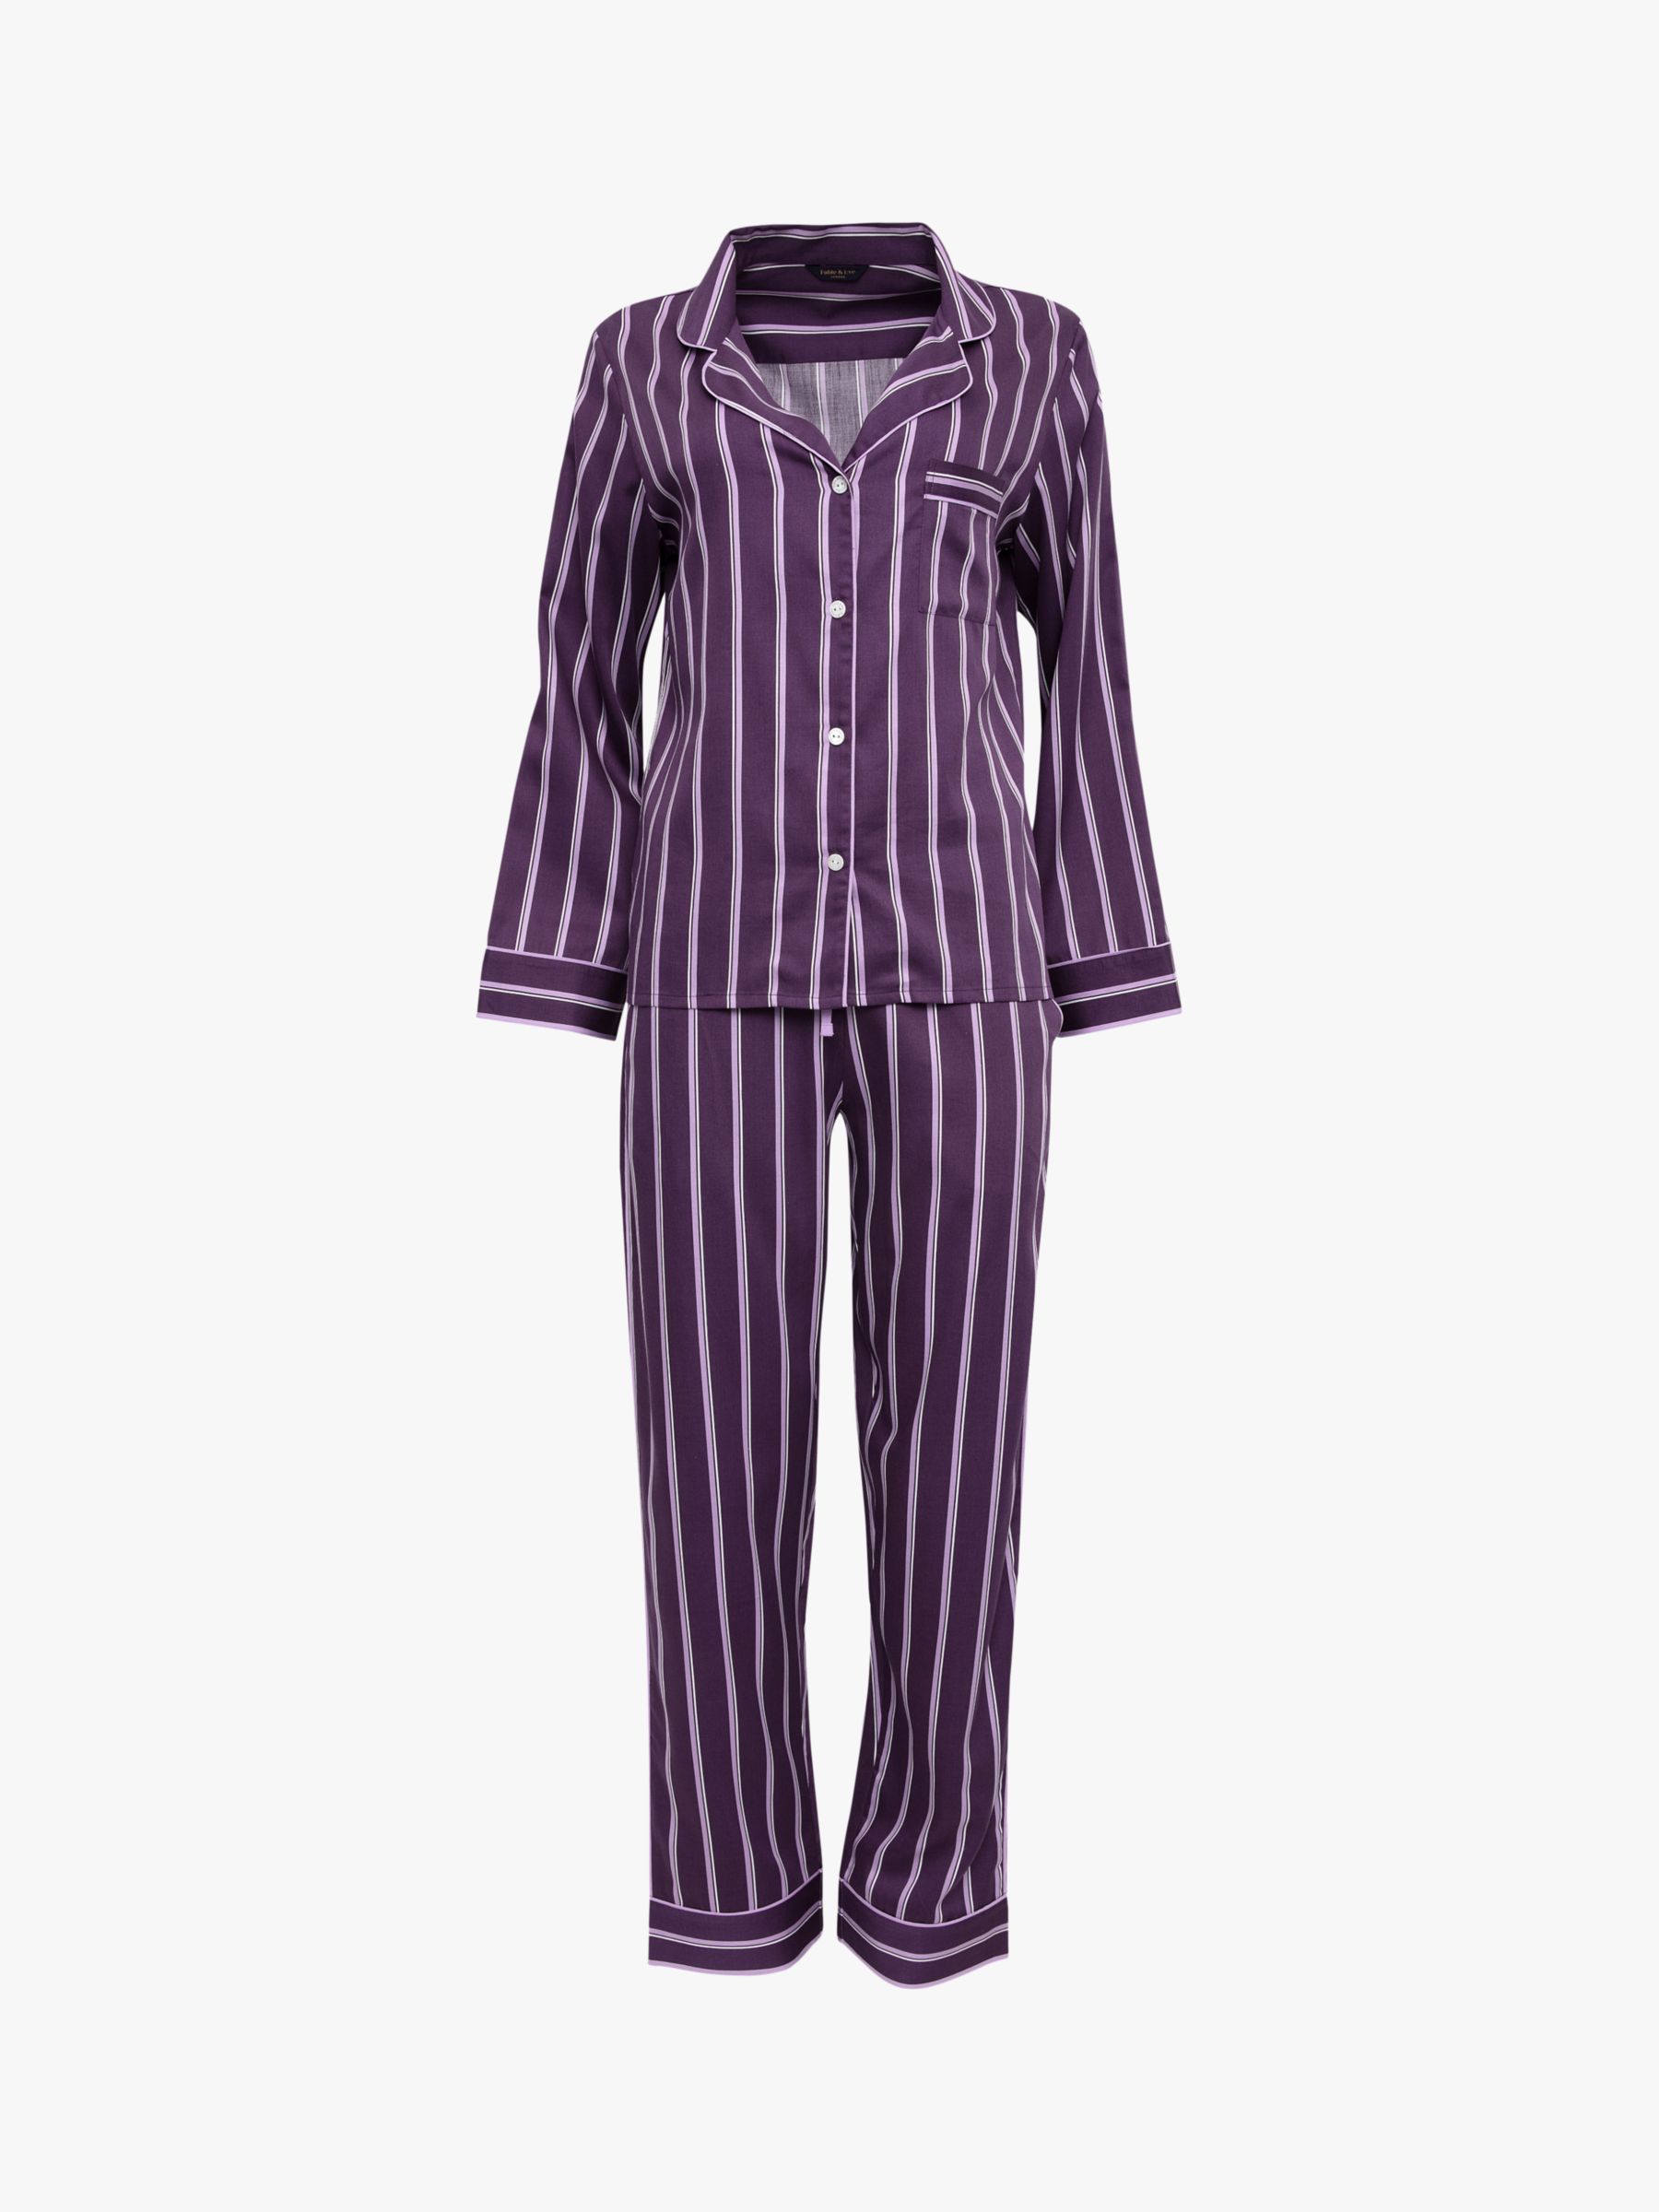 Buy Fable & Eve Stripe Print Pyjama Set, Purple Online at johnlewis.com